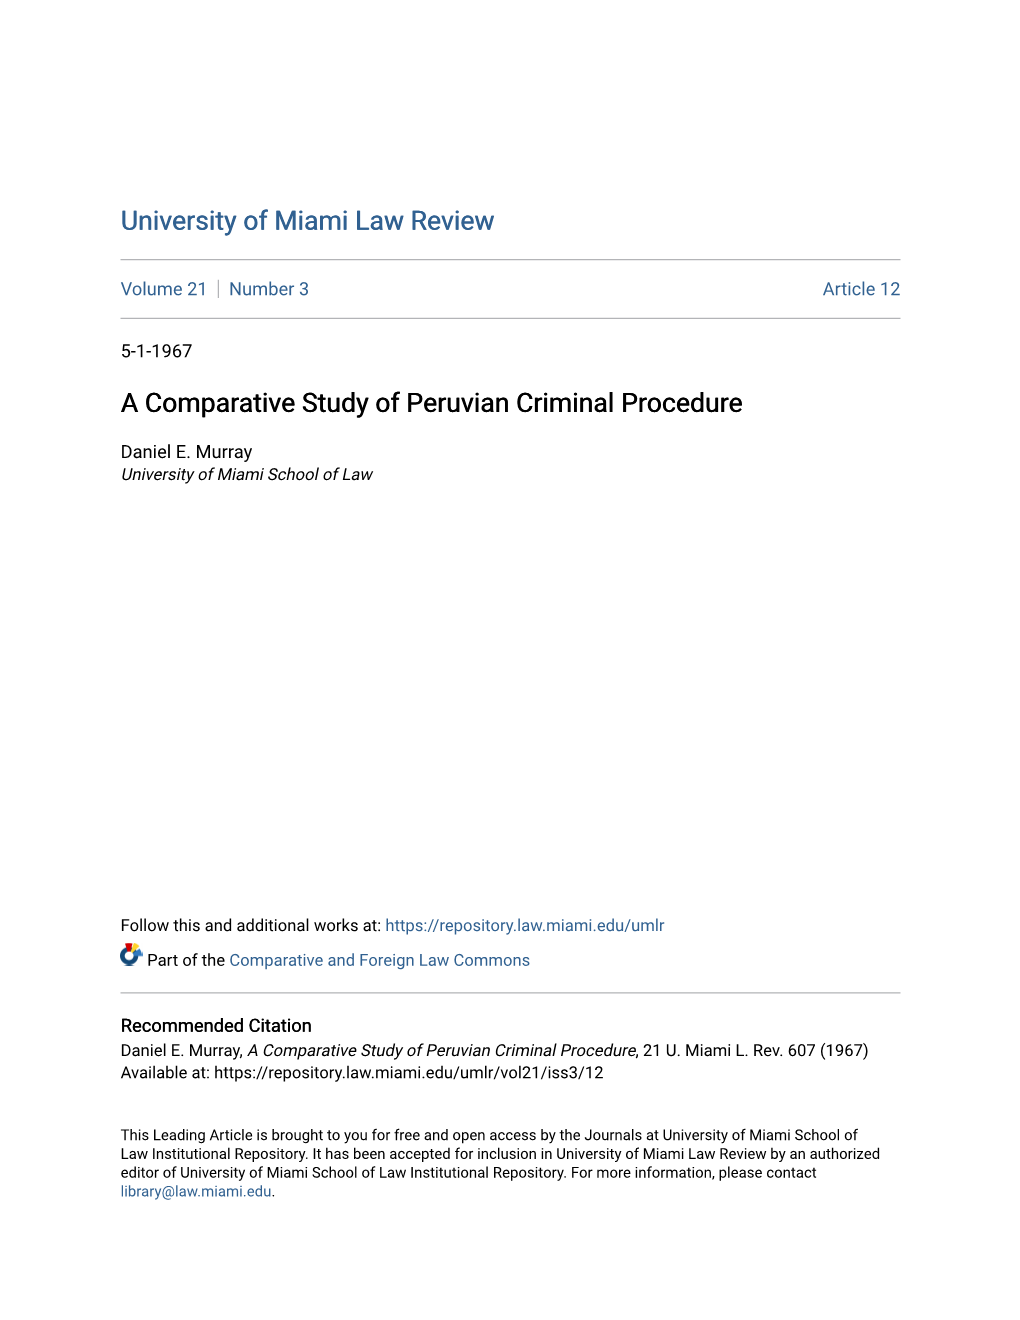 A Comparative Study of Peruvian Criminal Procedure